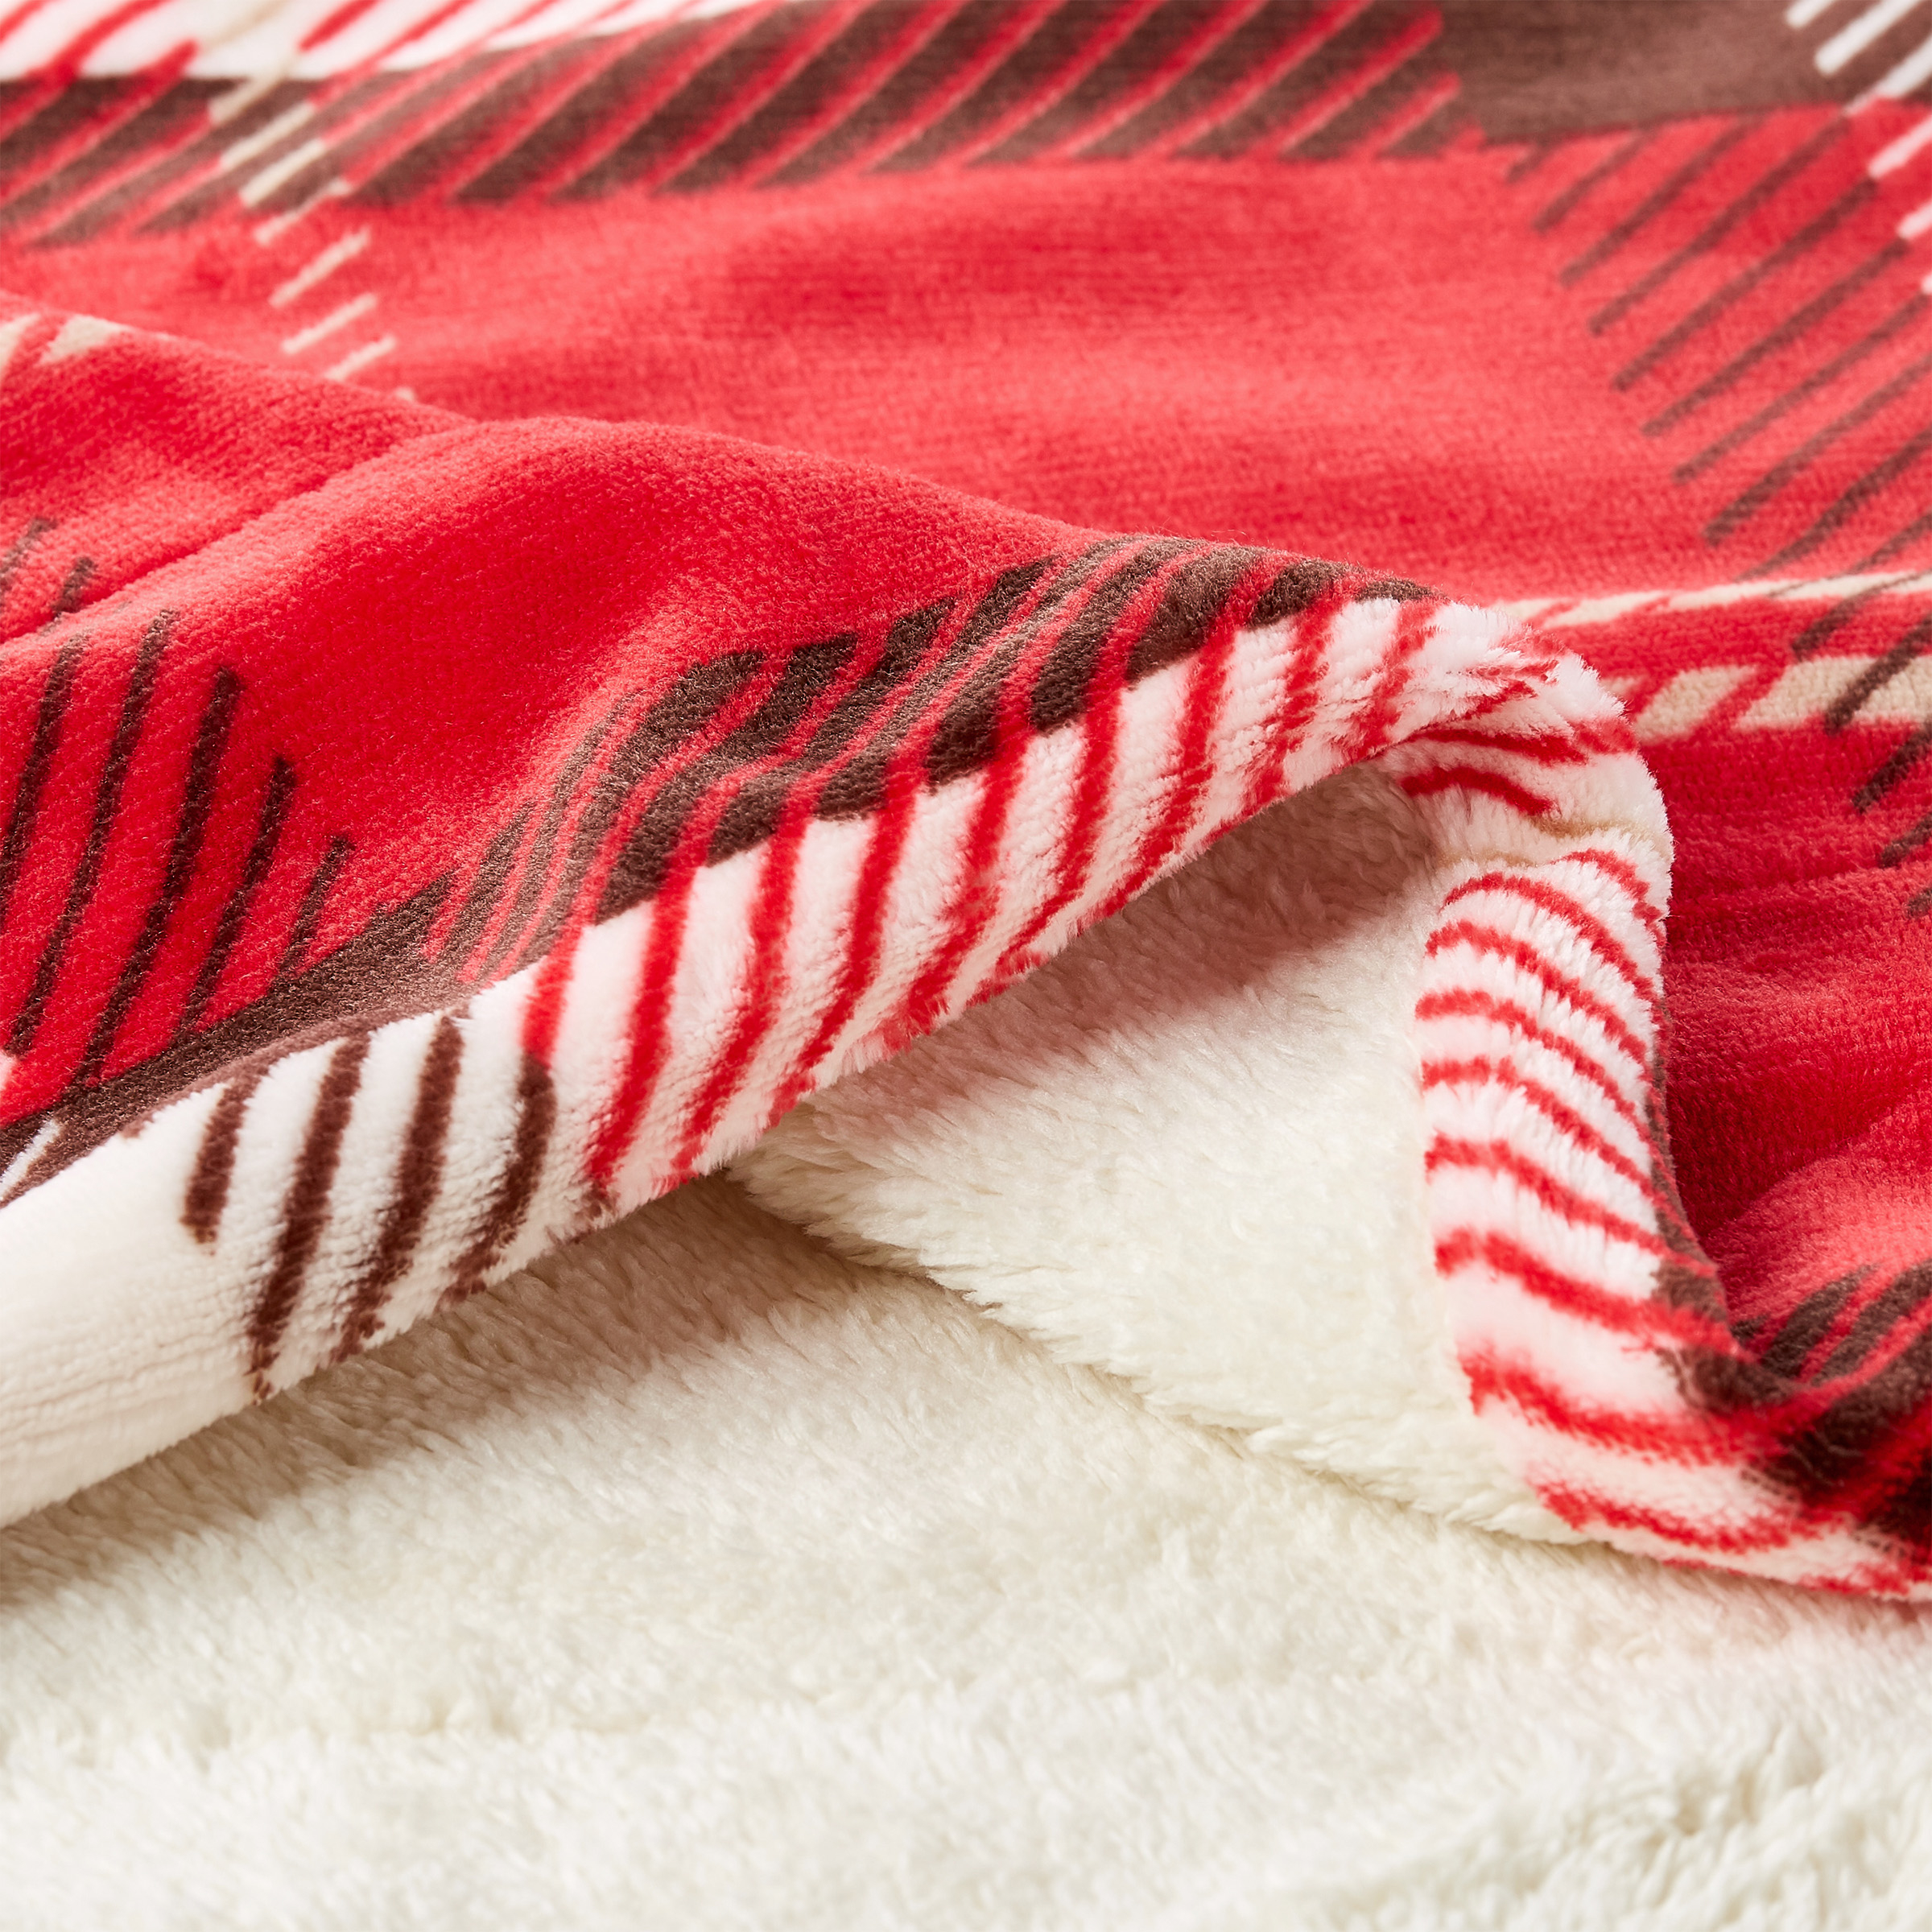 XL Oversized Throw Blanket Softest Fuzziest Most Wonderful Feel 2 Sided Adult Woobie Great Gift - Cardinal